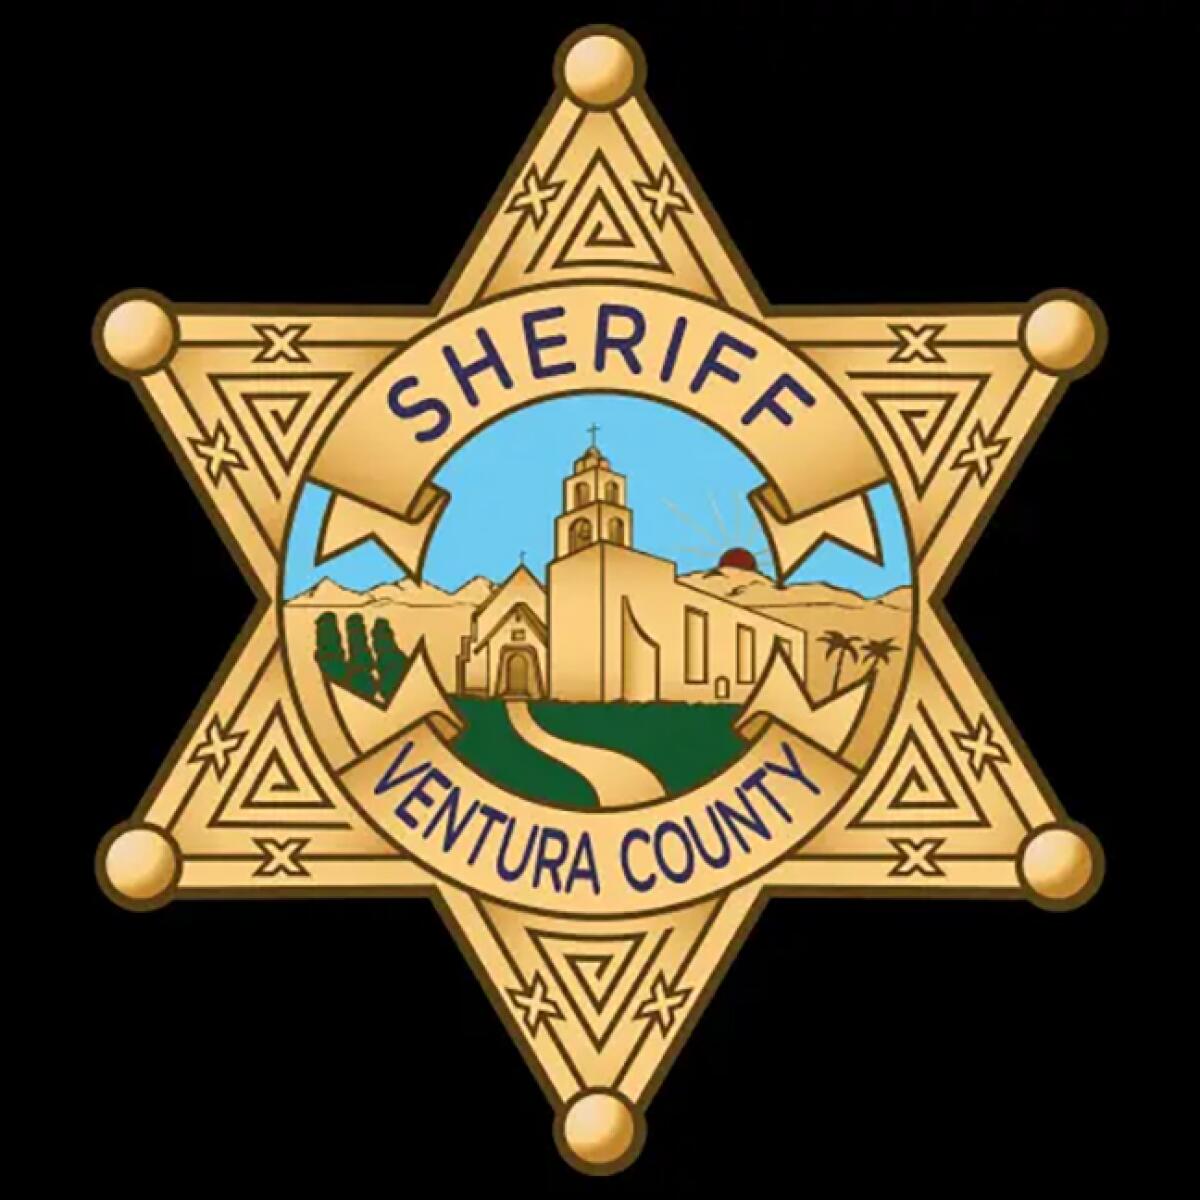 A Ventura County sheriff's badge